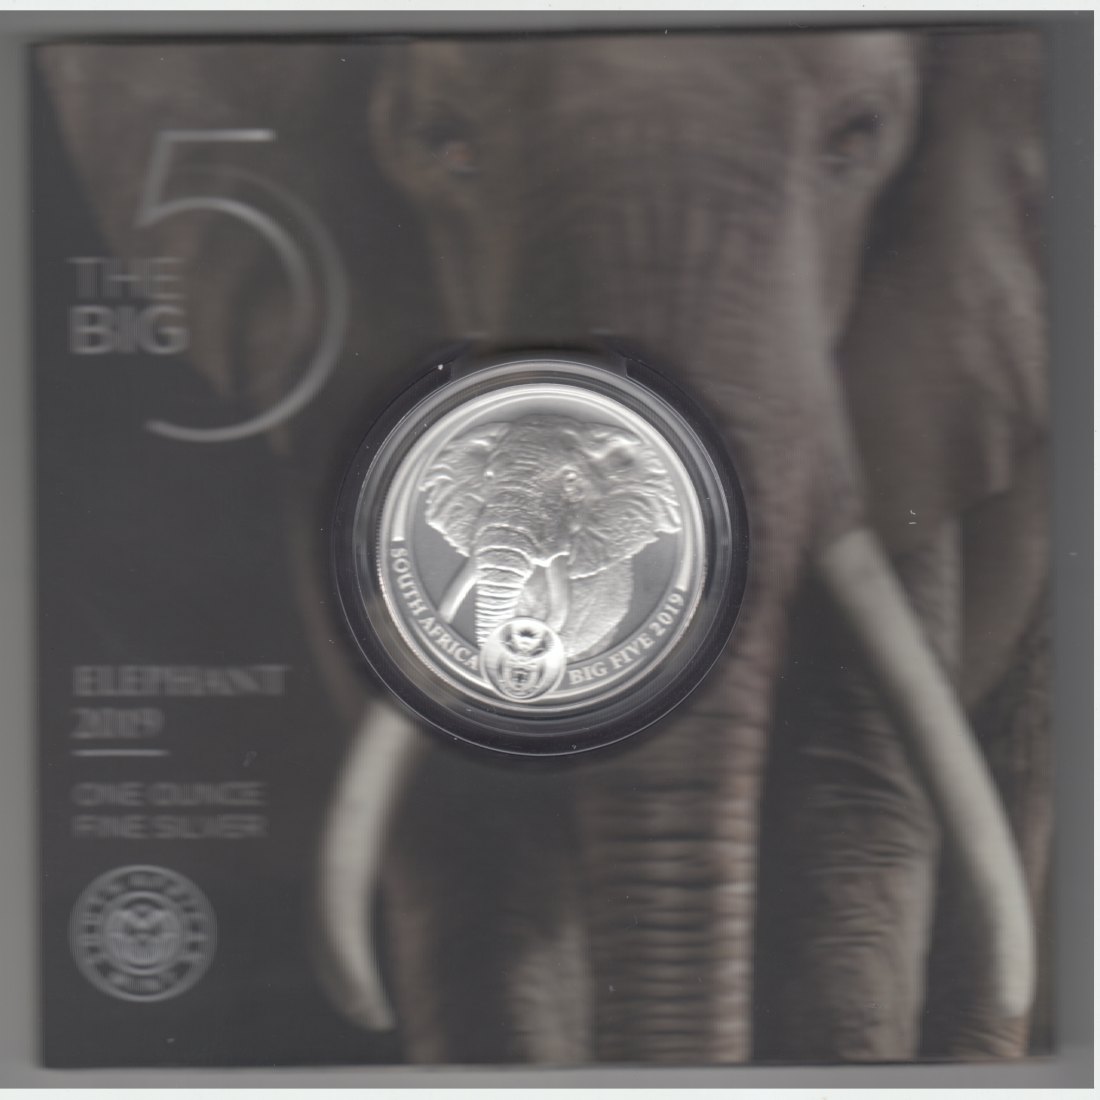  Südafrika, BIG FIVE, Elefant 2019, 1 unze oz Silber, nur 15000 Exemplare   